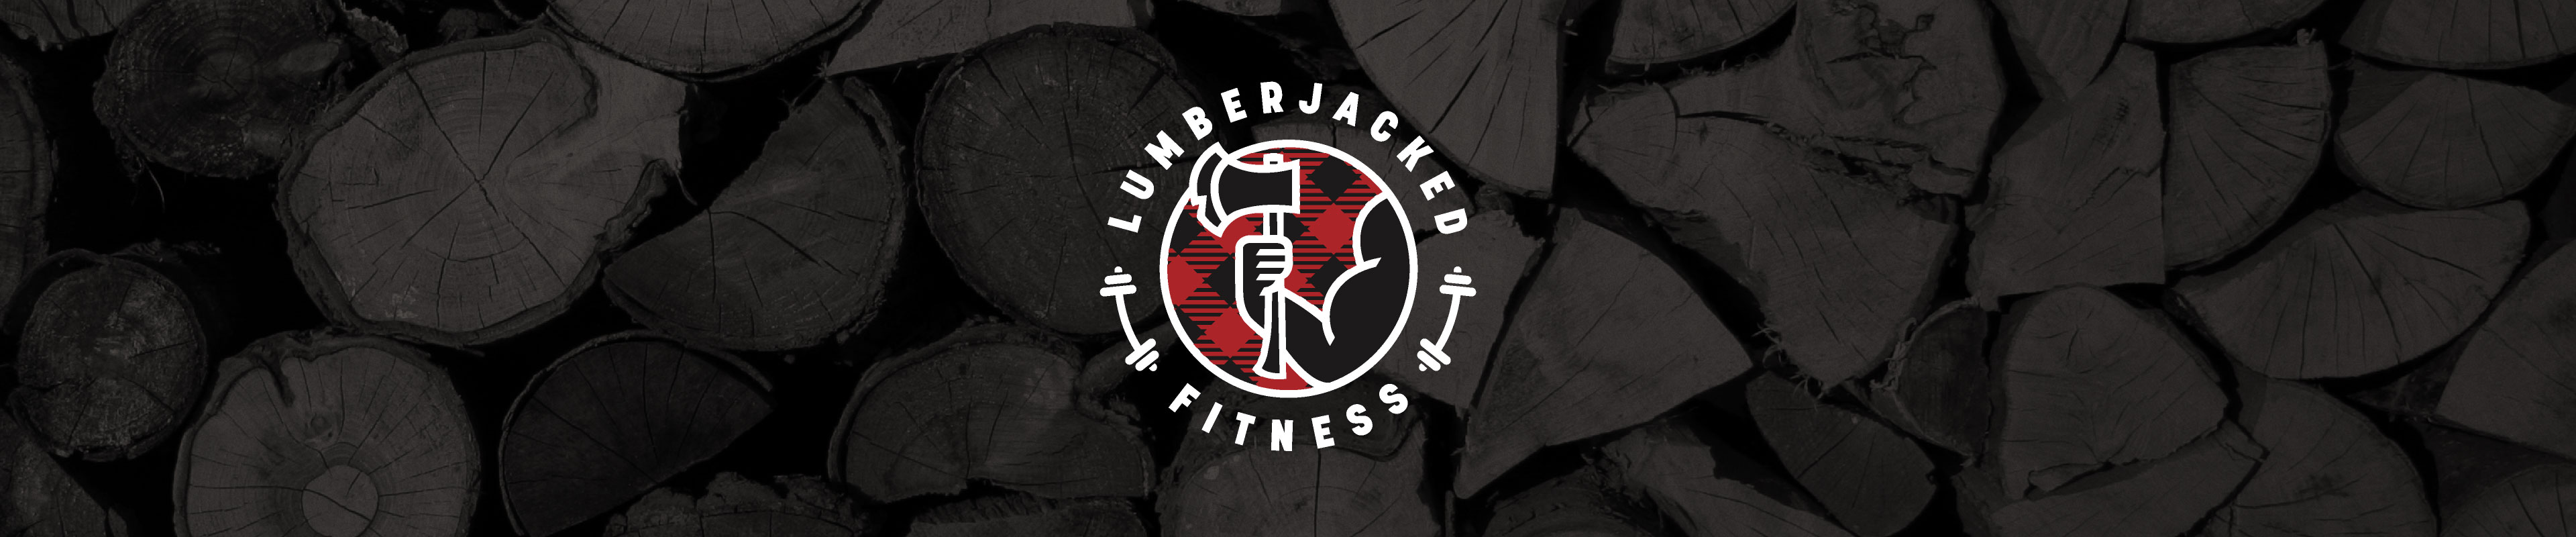 Lumberjacked Fitness logo